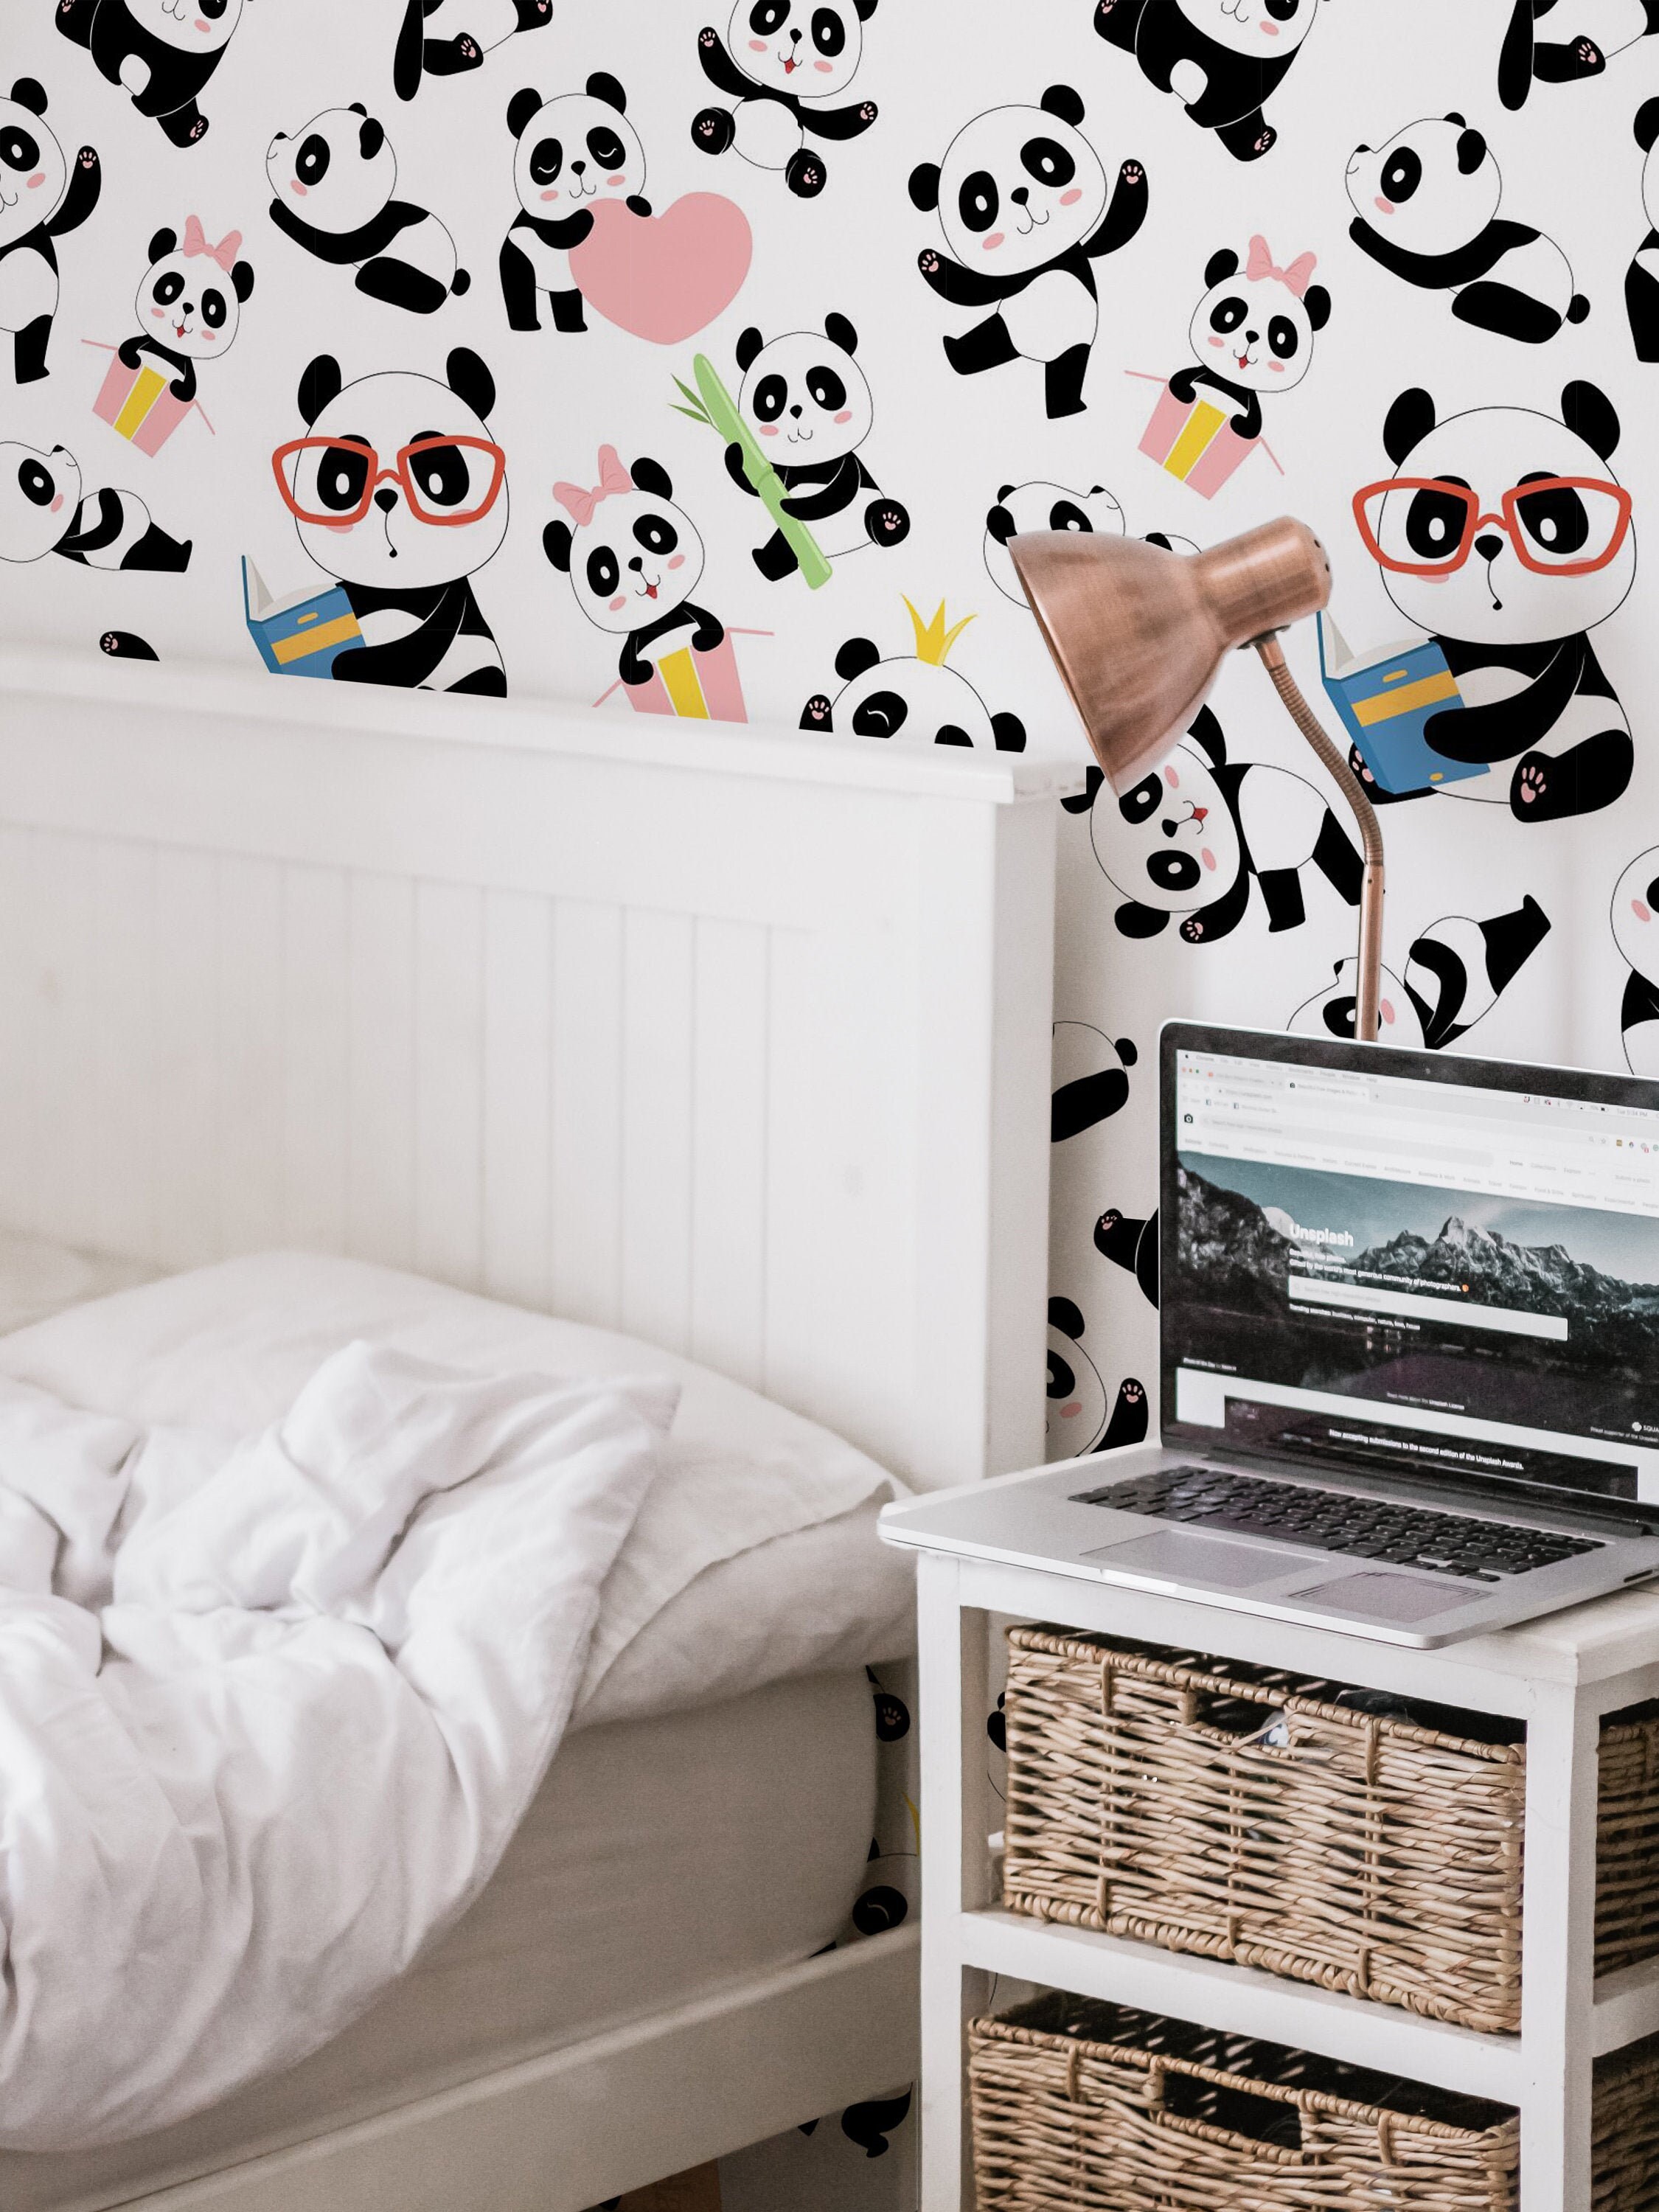 Kawaii Panda Fabric, Wallpaper and Home Decor